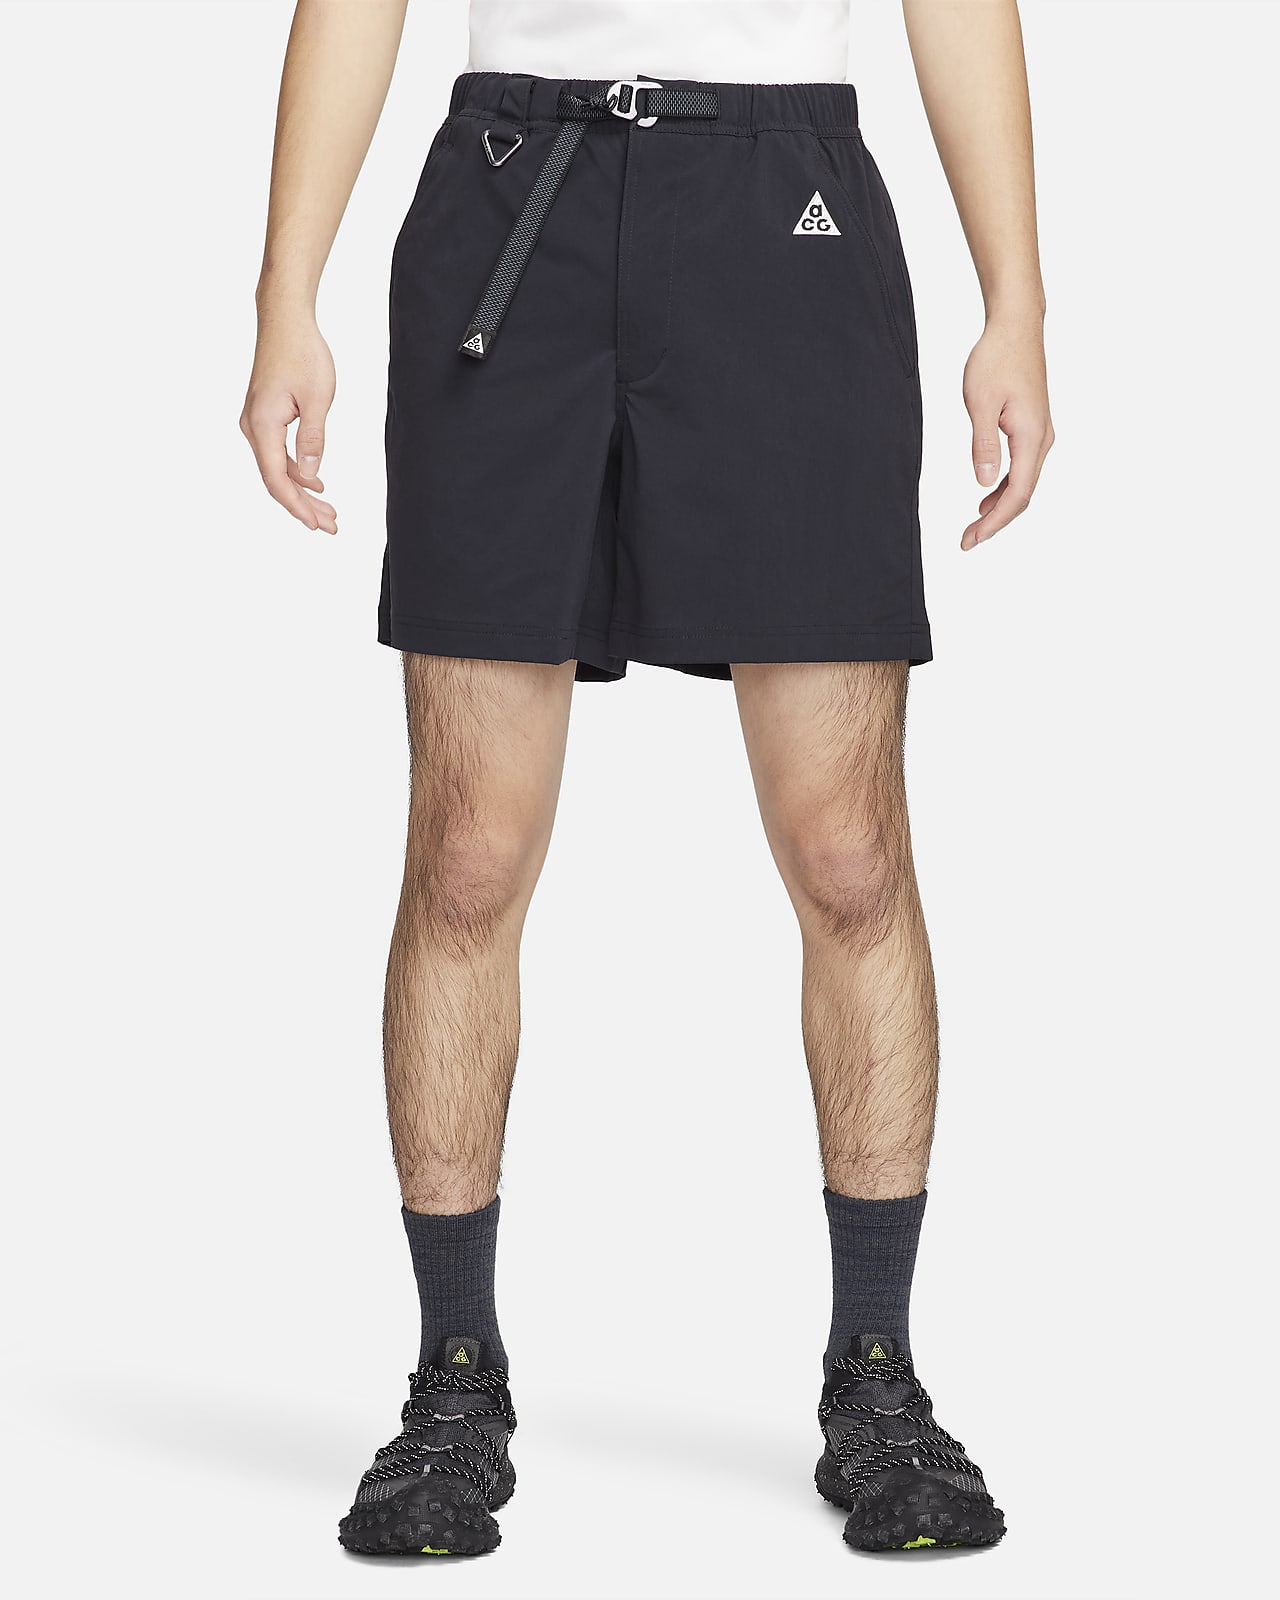 Nike ACG 男款健行短褲